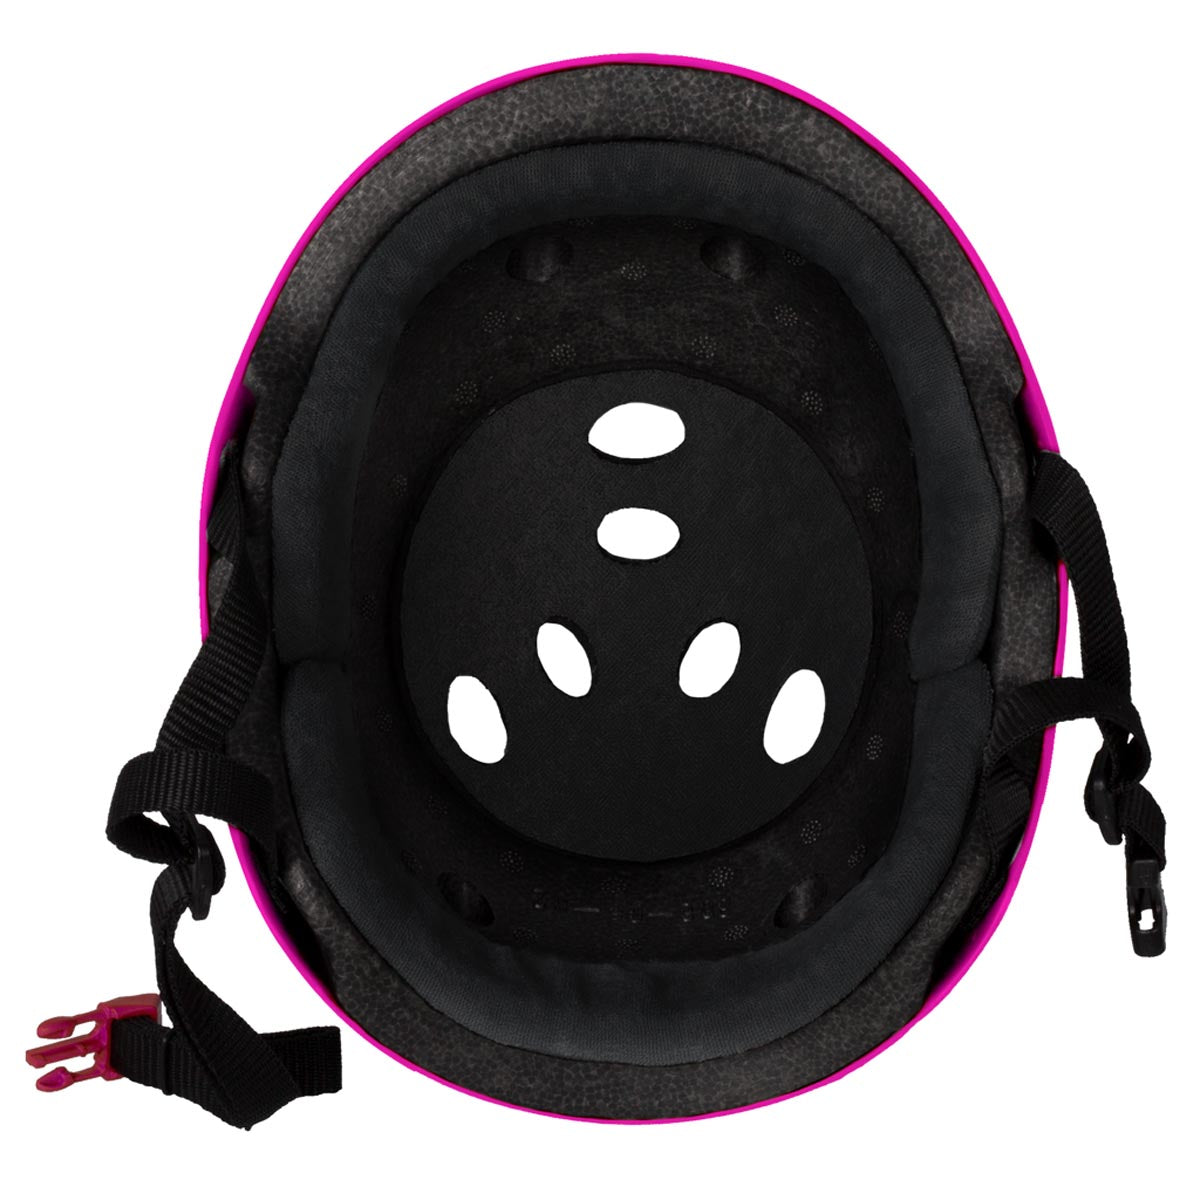 Triple Eight Certified Sweatsaver Helmet - Pink Gloss image 4